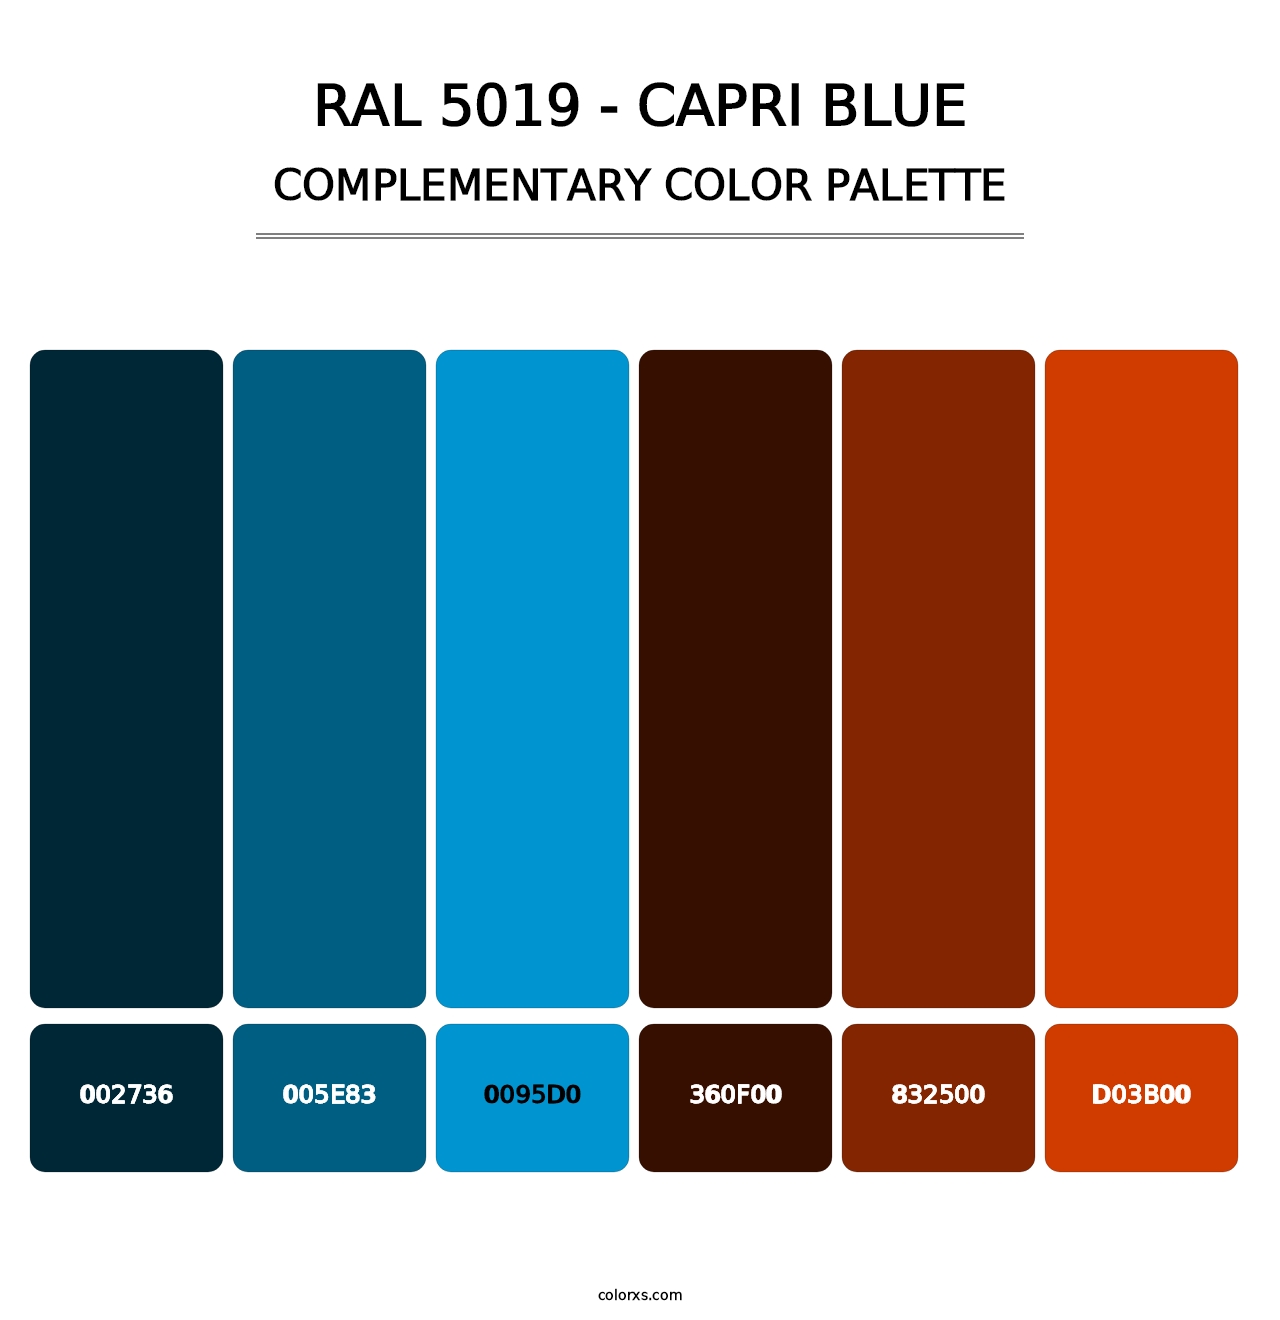 RAL 5019 - Capri Blue - Complementary Color Palette